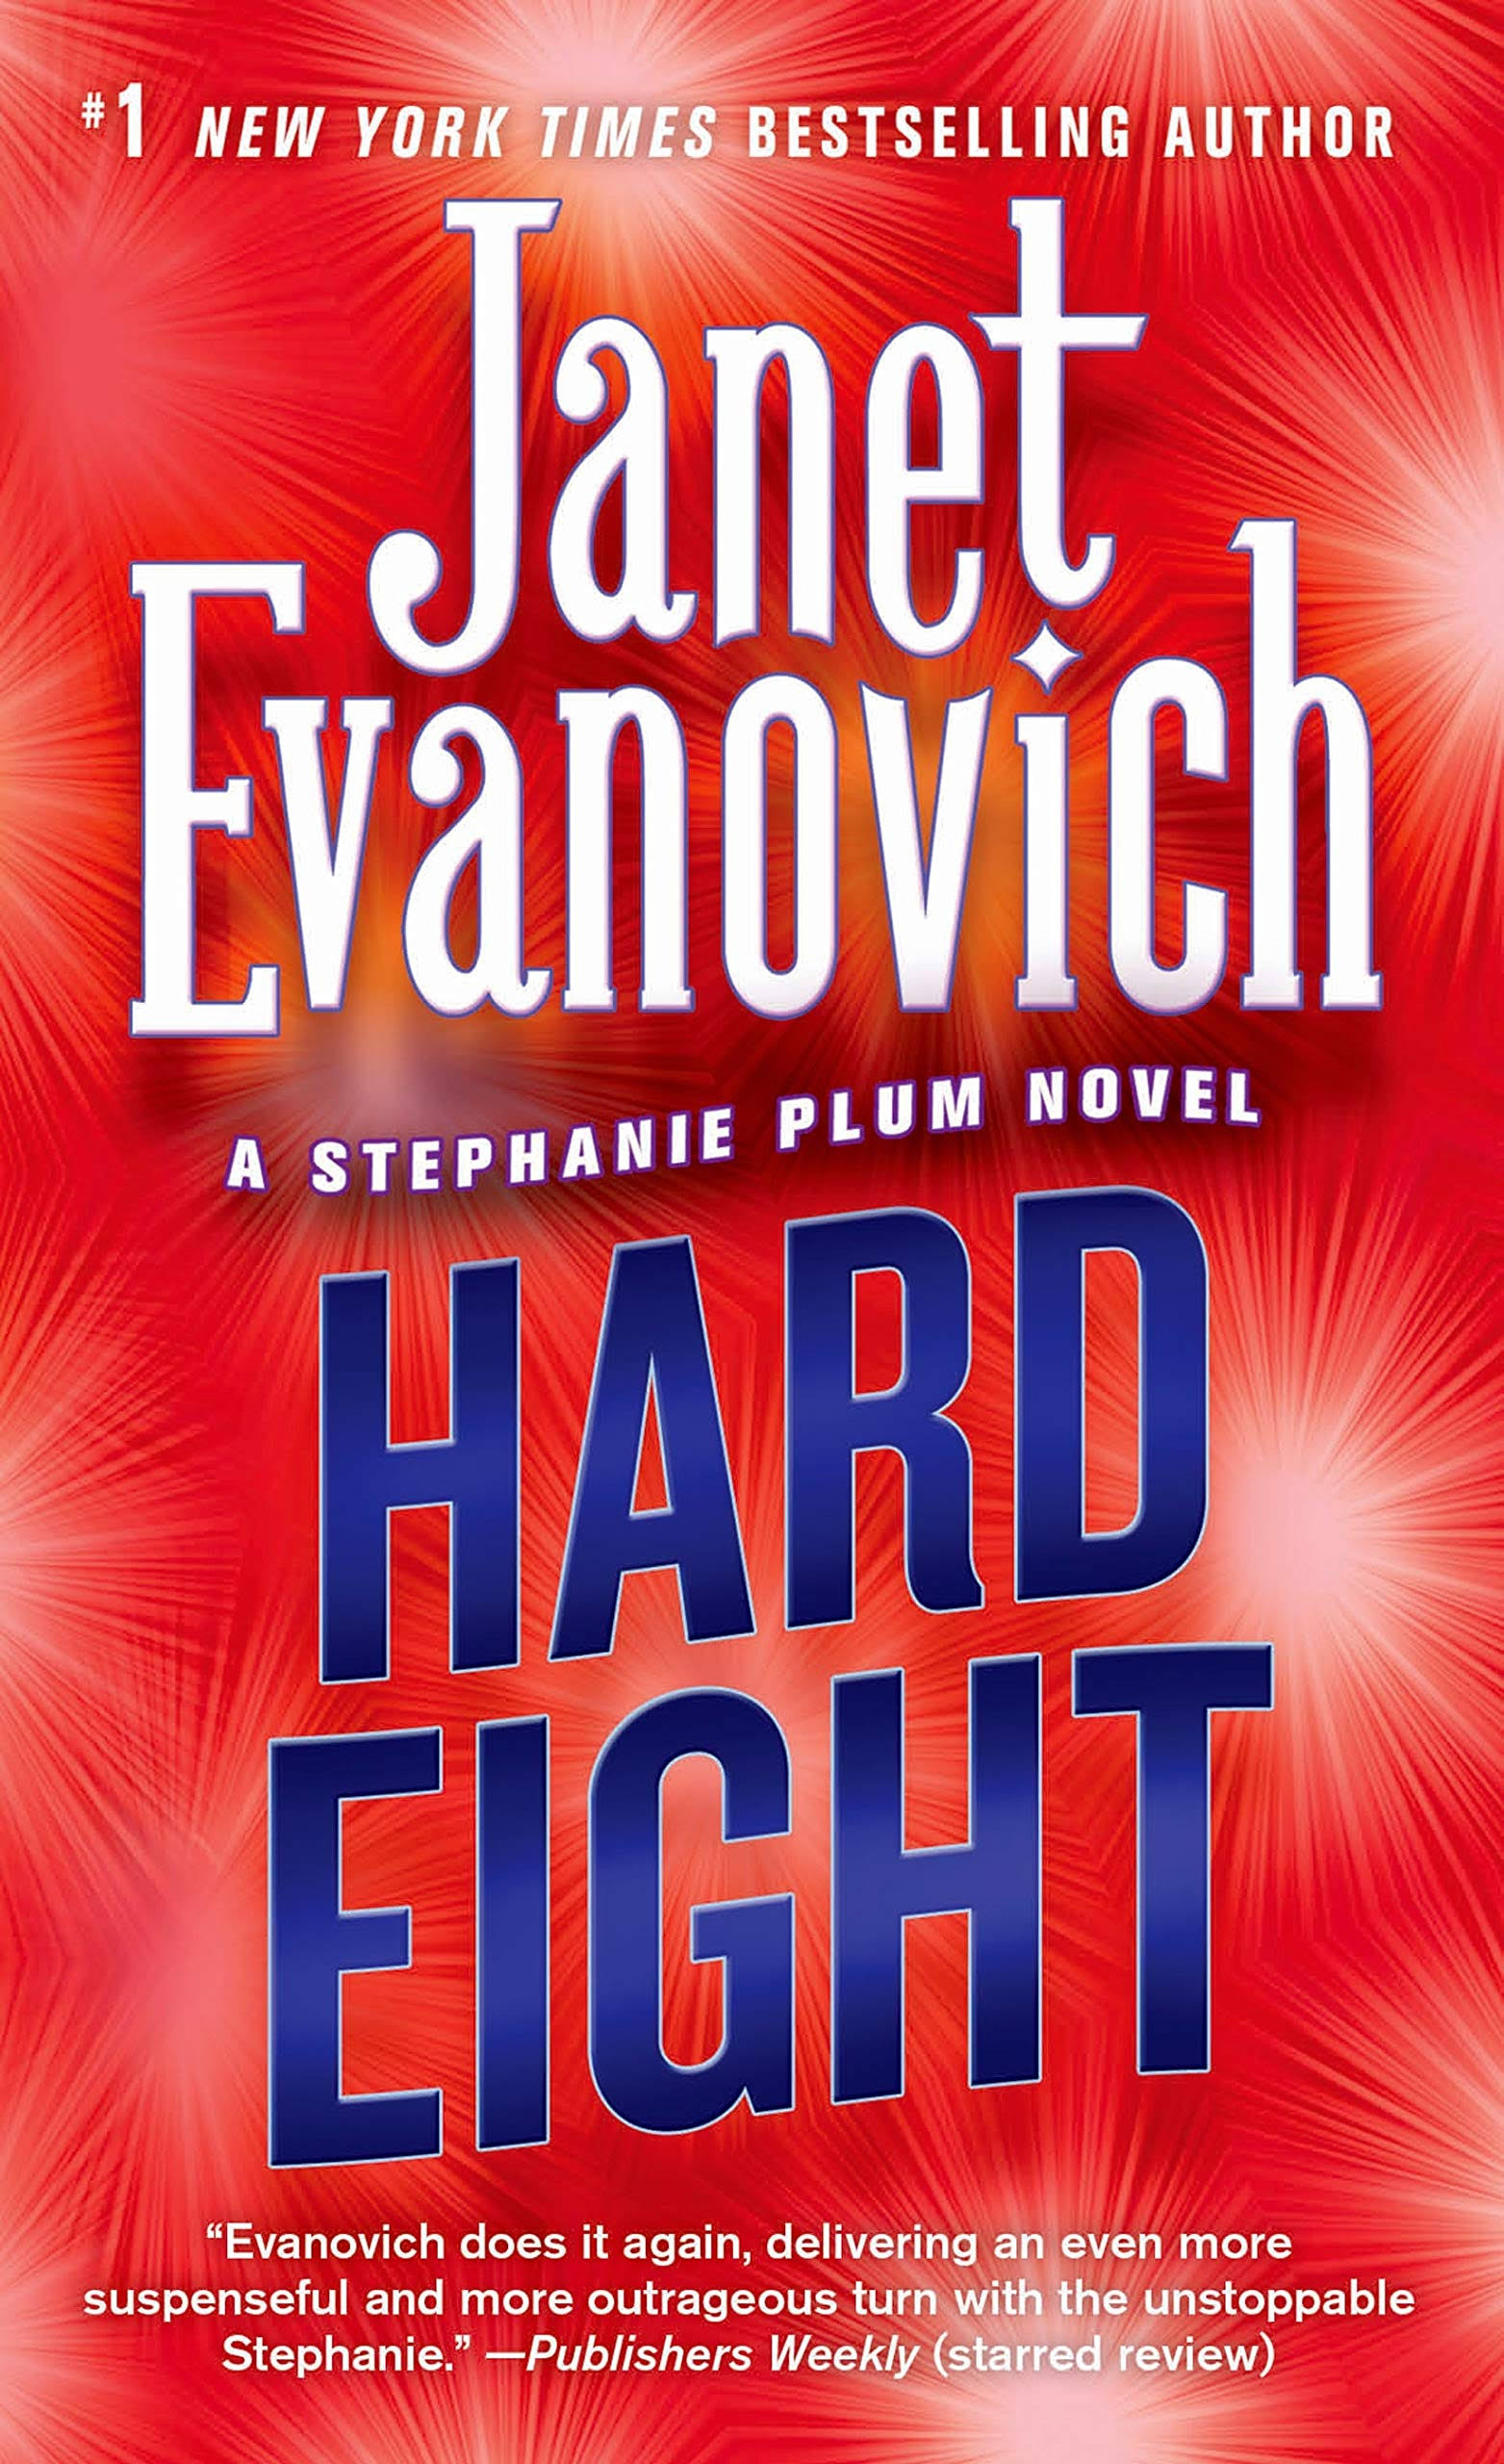 Hard Eight: A Stephanie Plum Novel - Janet Evanovich